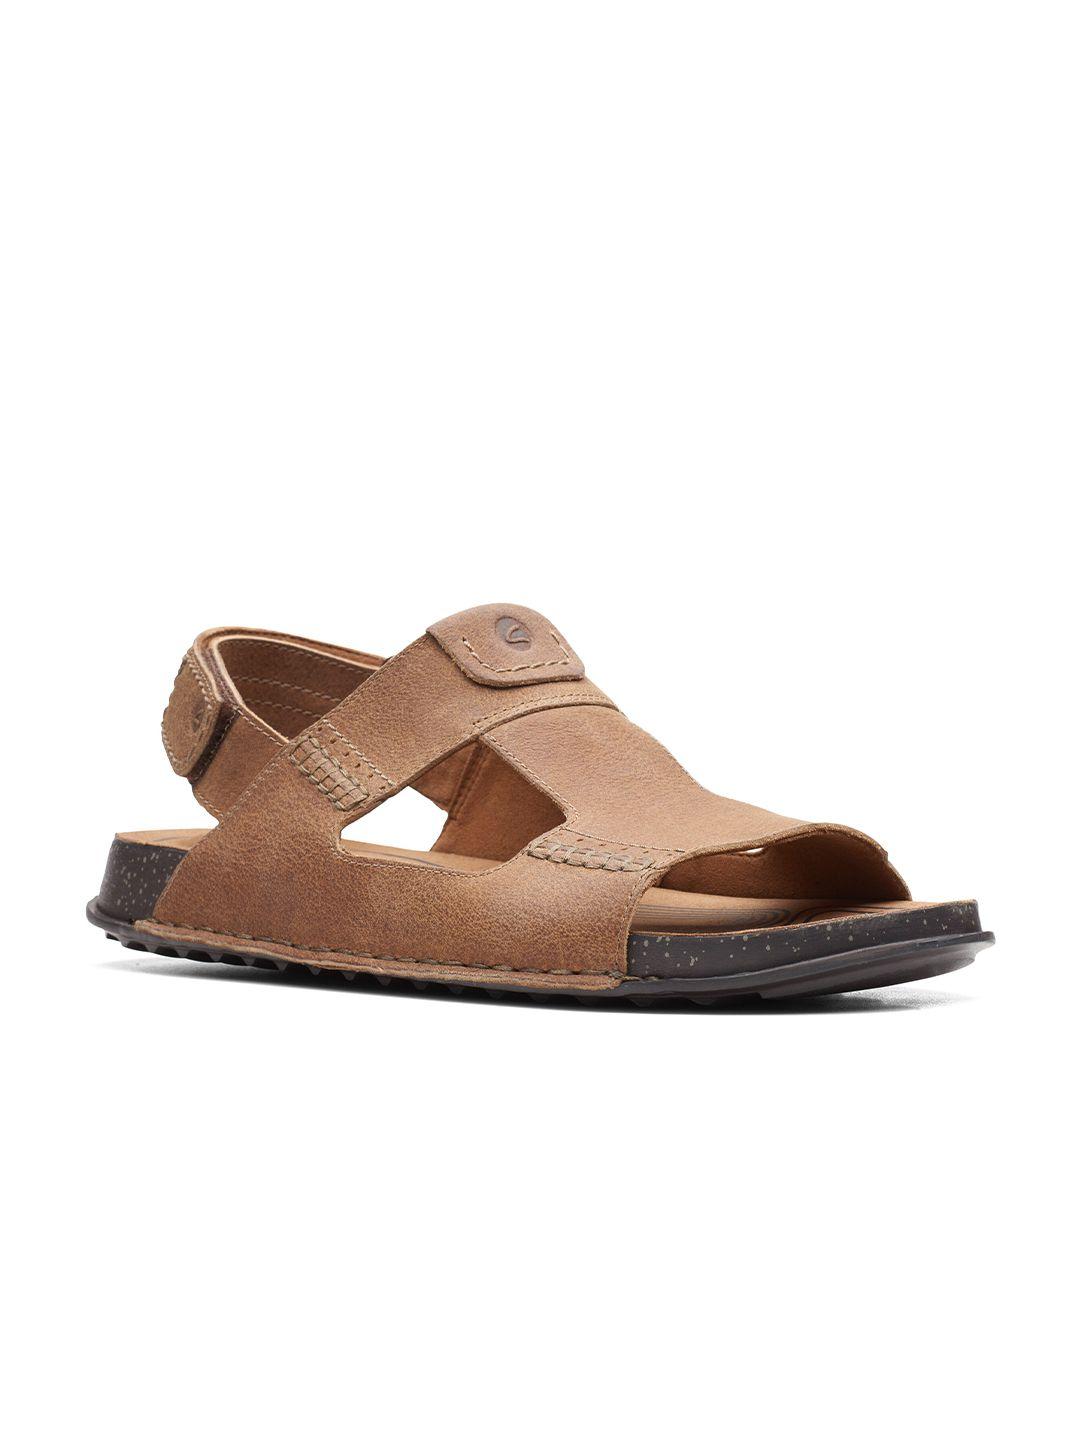 clarks men leather comfort sandals